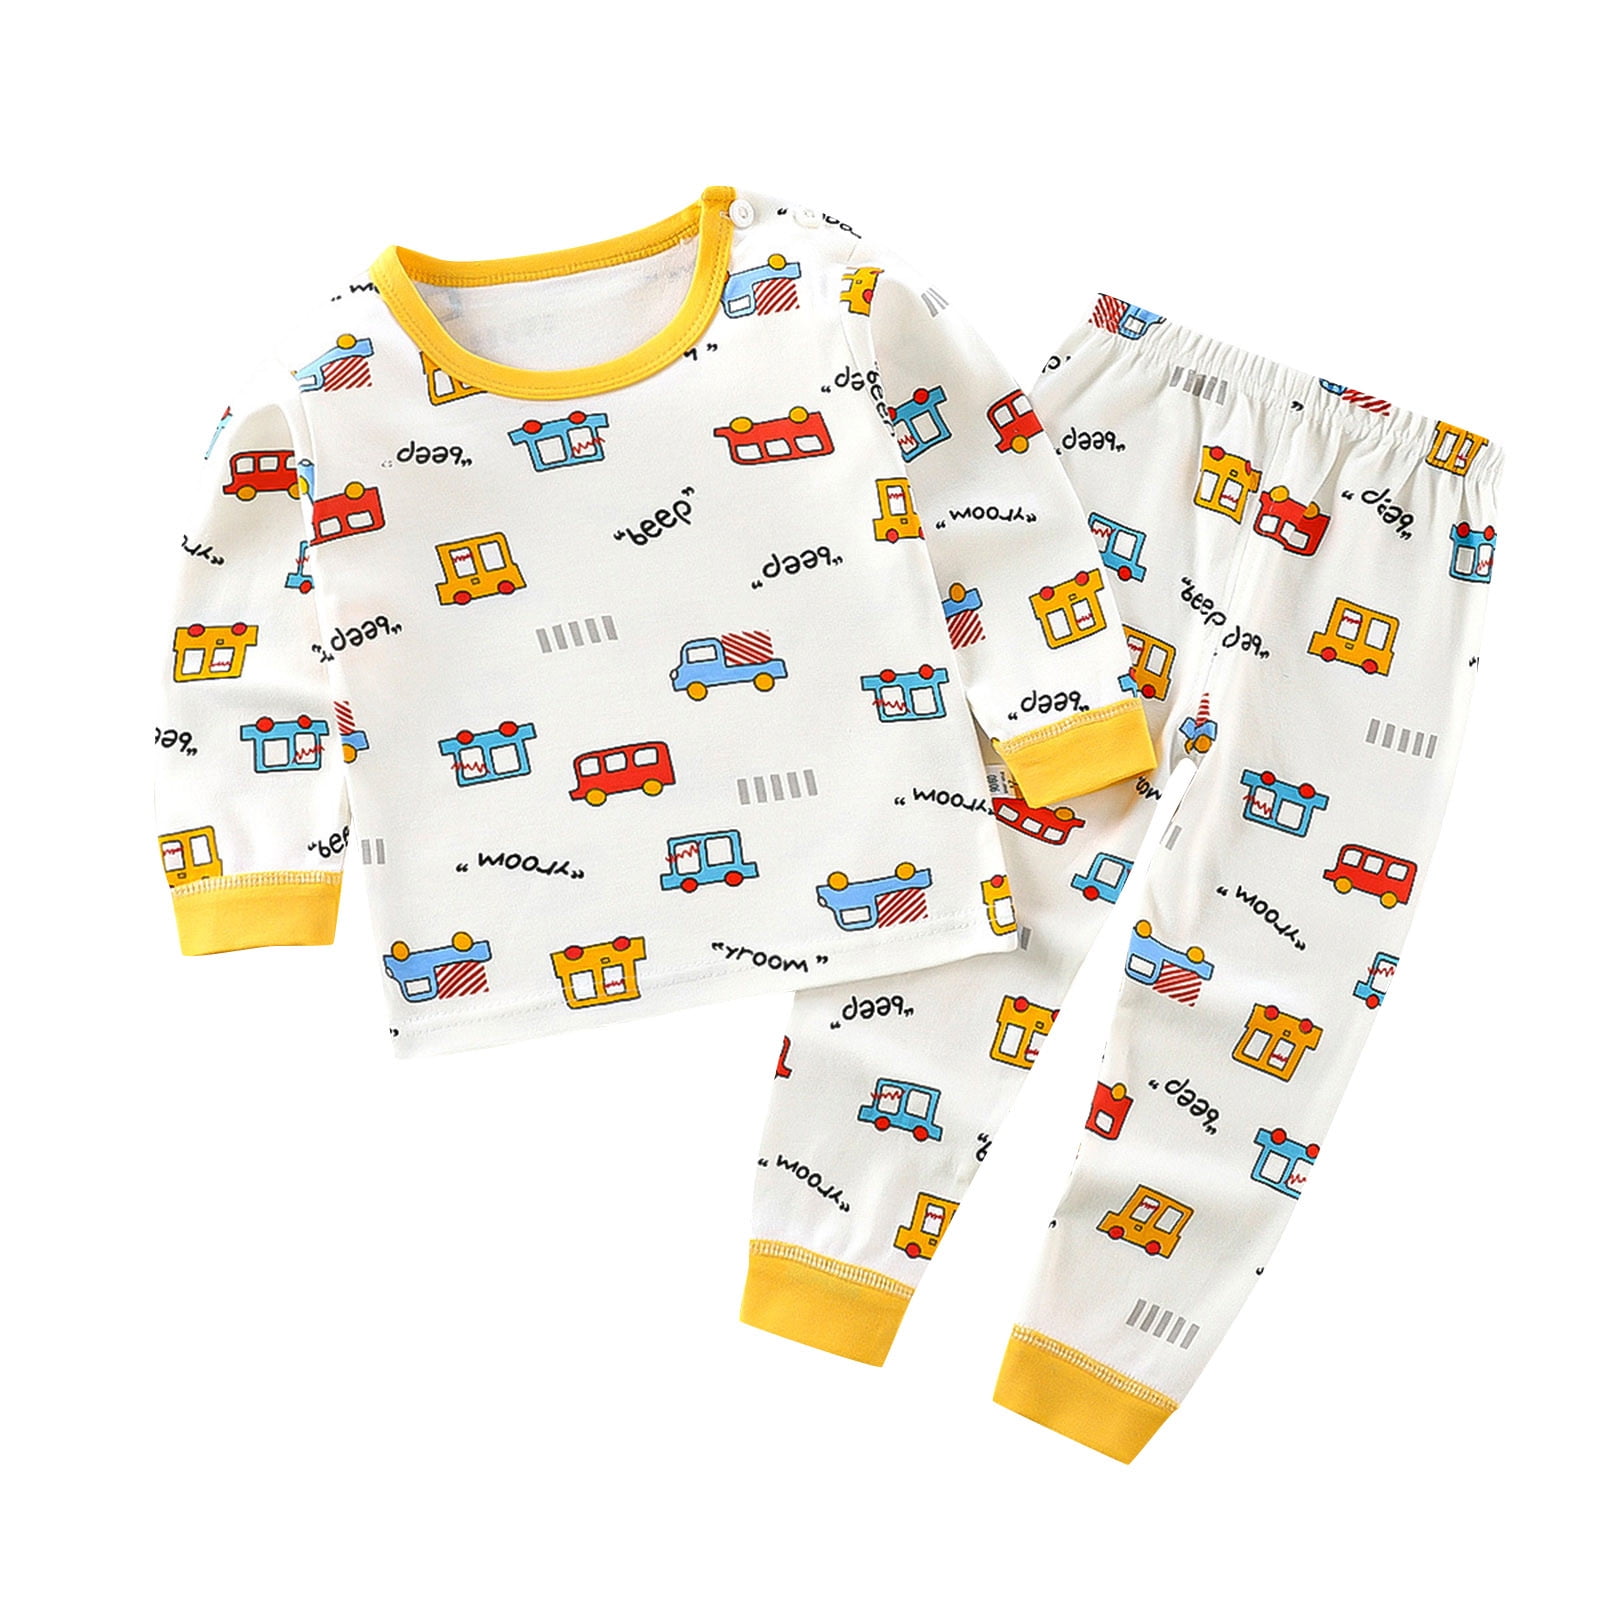 NKOOGH Sleepers With Feet Toddler 18 Month Pajamas Kids Baby Pj鈥橲 Boys  Girls Long Sleeve Cartoon Tops Pants Sleepwear Pajamas Outfits Set 2Pcs 